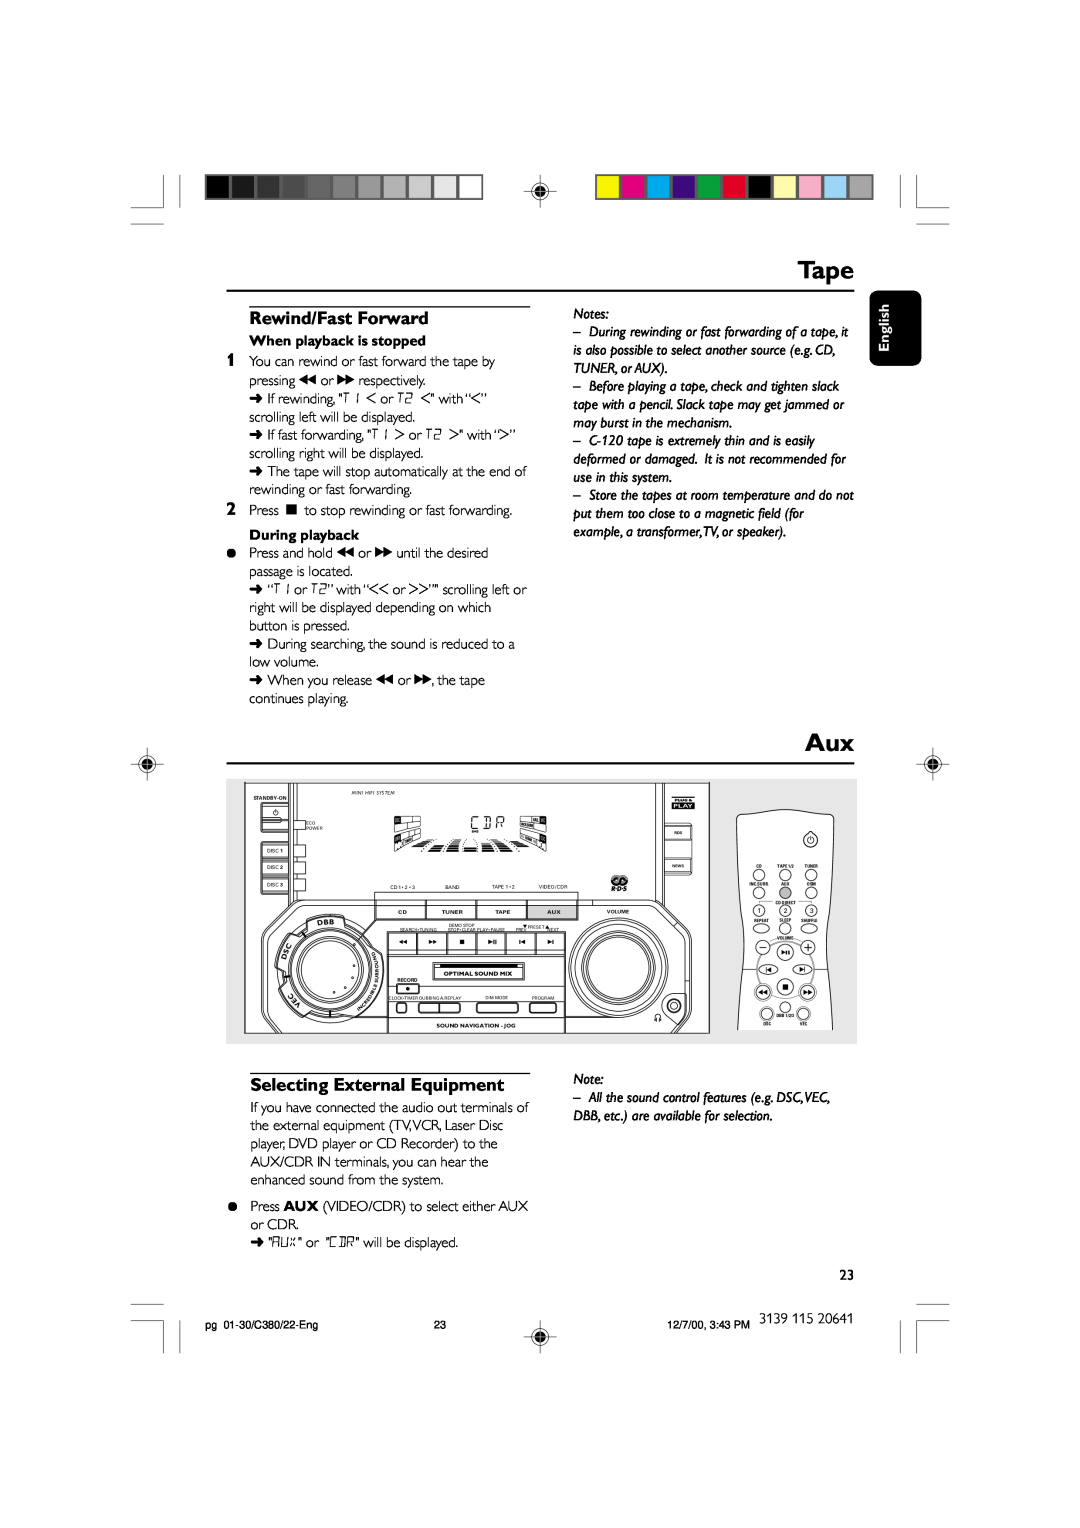 Philips FW-C380 manual Rewind/Fast Forward, Selecting External Equipment, Tape, English 